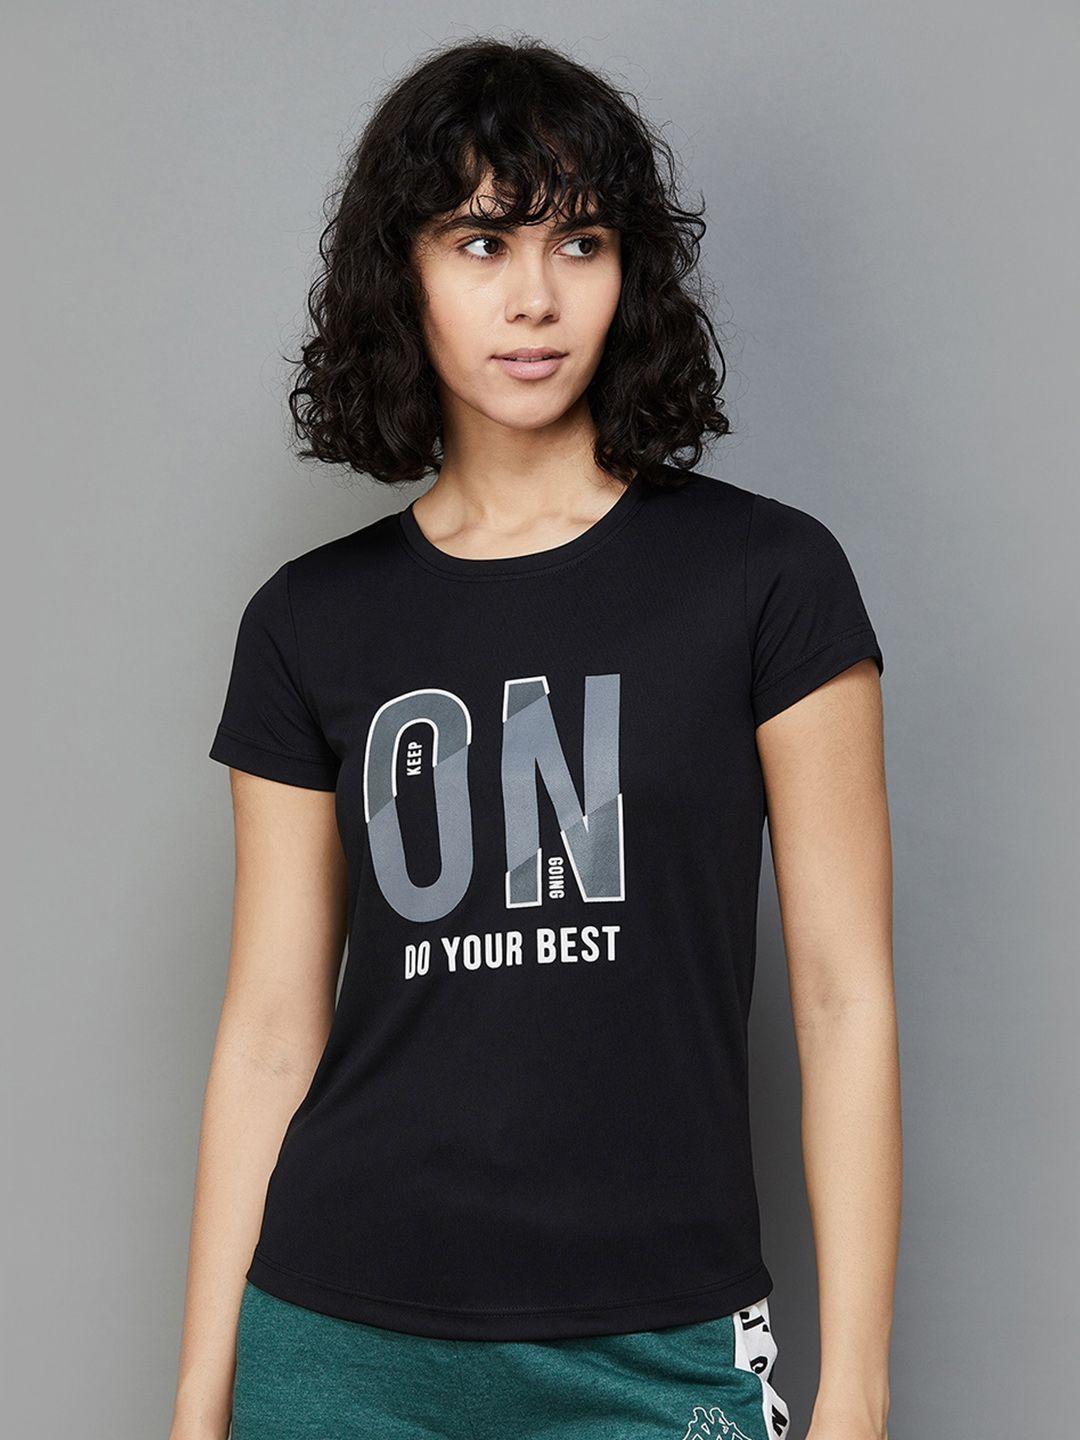 Kappa Typography Printed Round Neck Sports T-Shirt